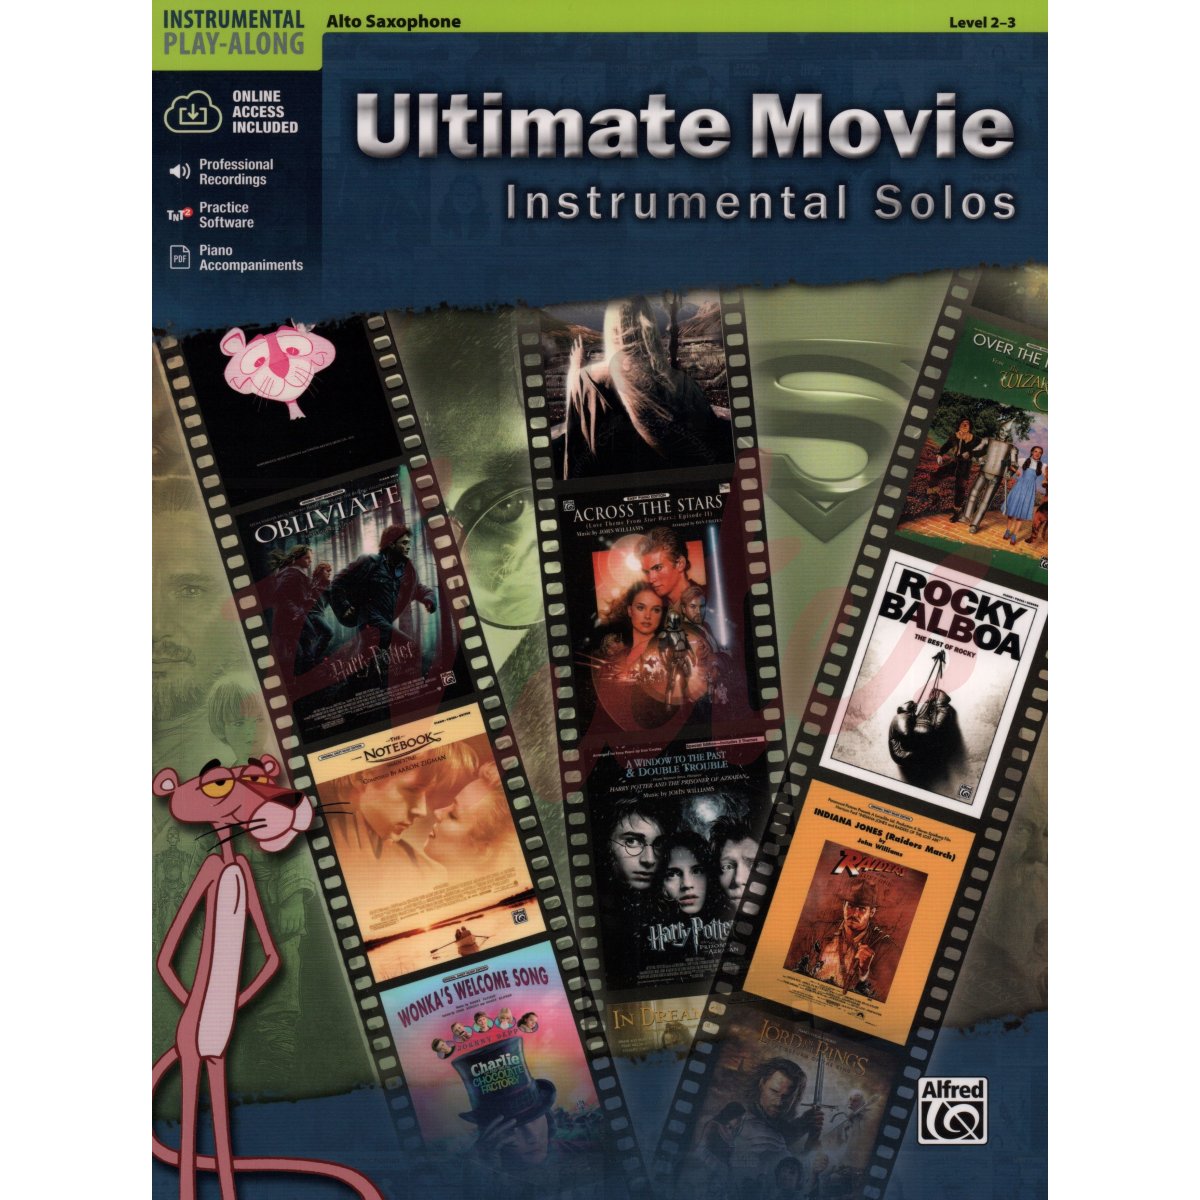 Ultimate Movie Instrumental Solos for Alto Saxophone